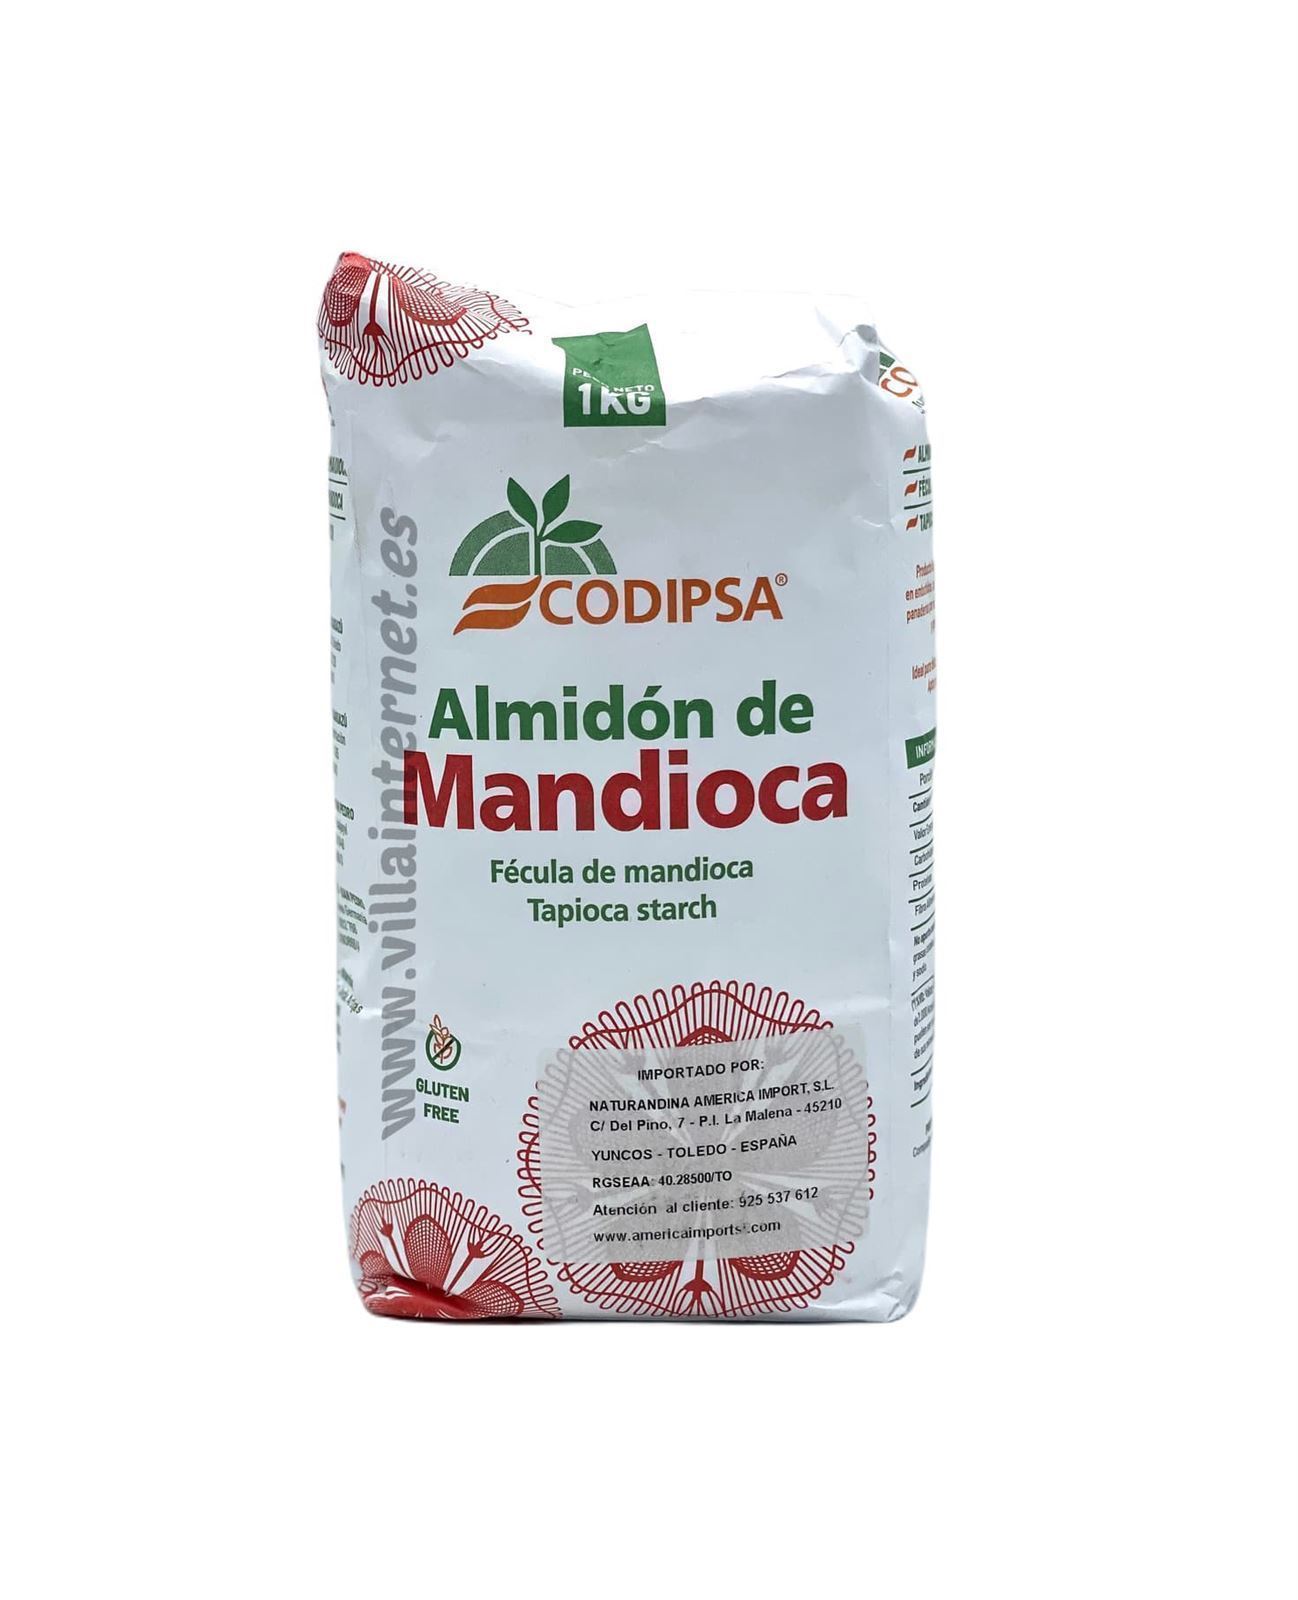 Almidón de mandioca Codipsa 1Kg - Imagen 1